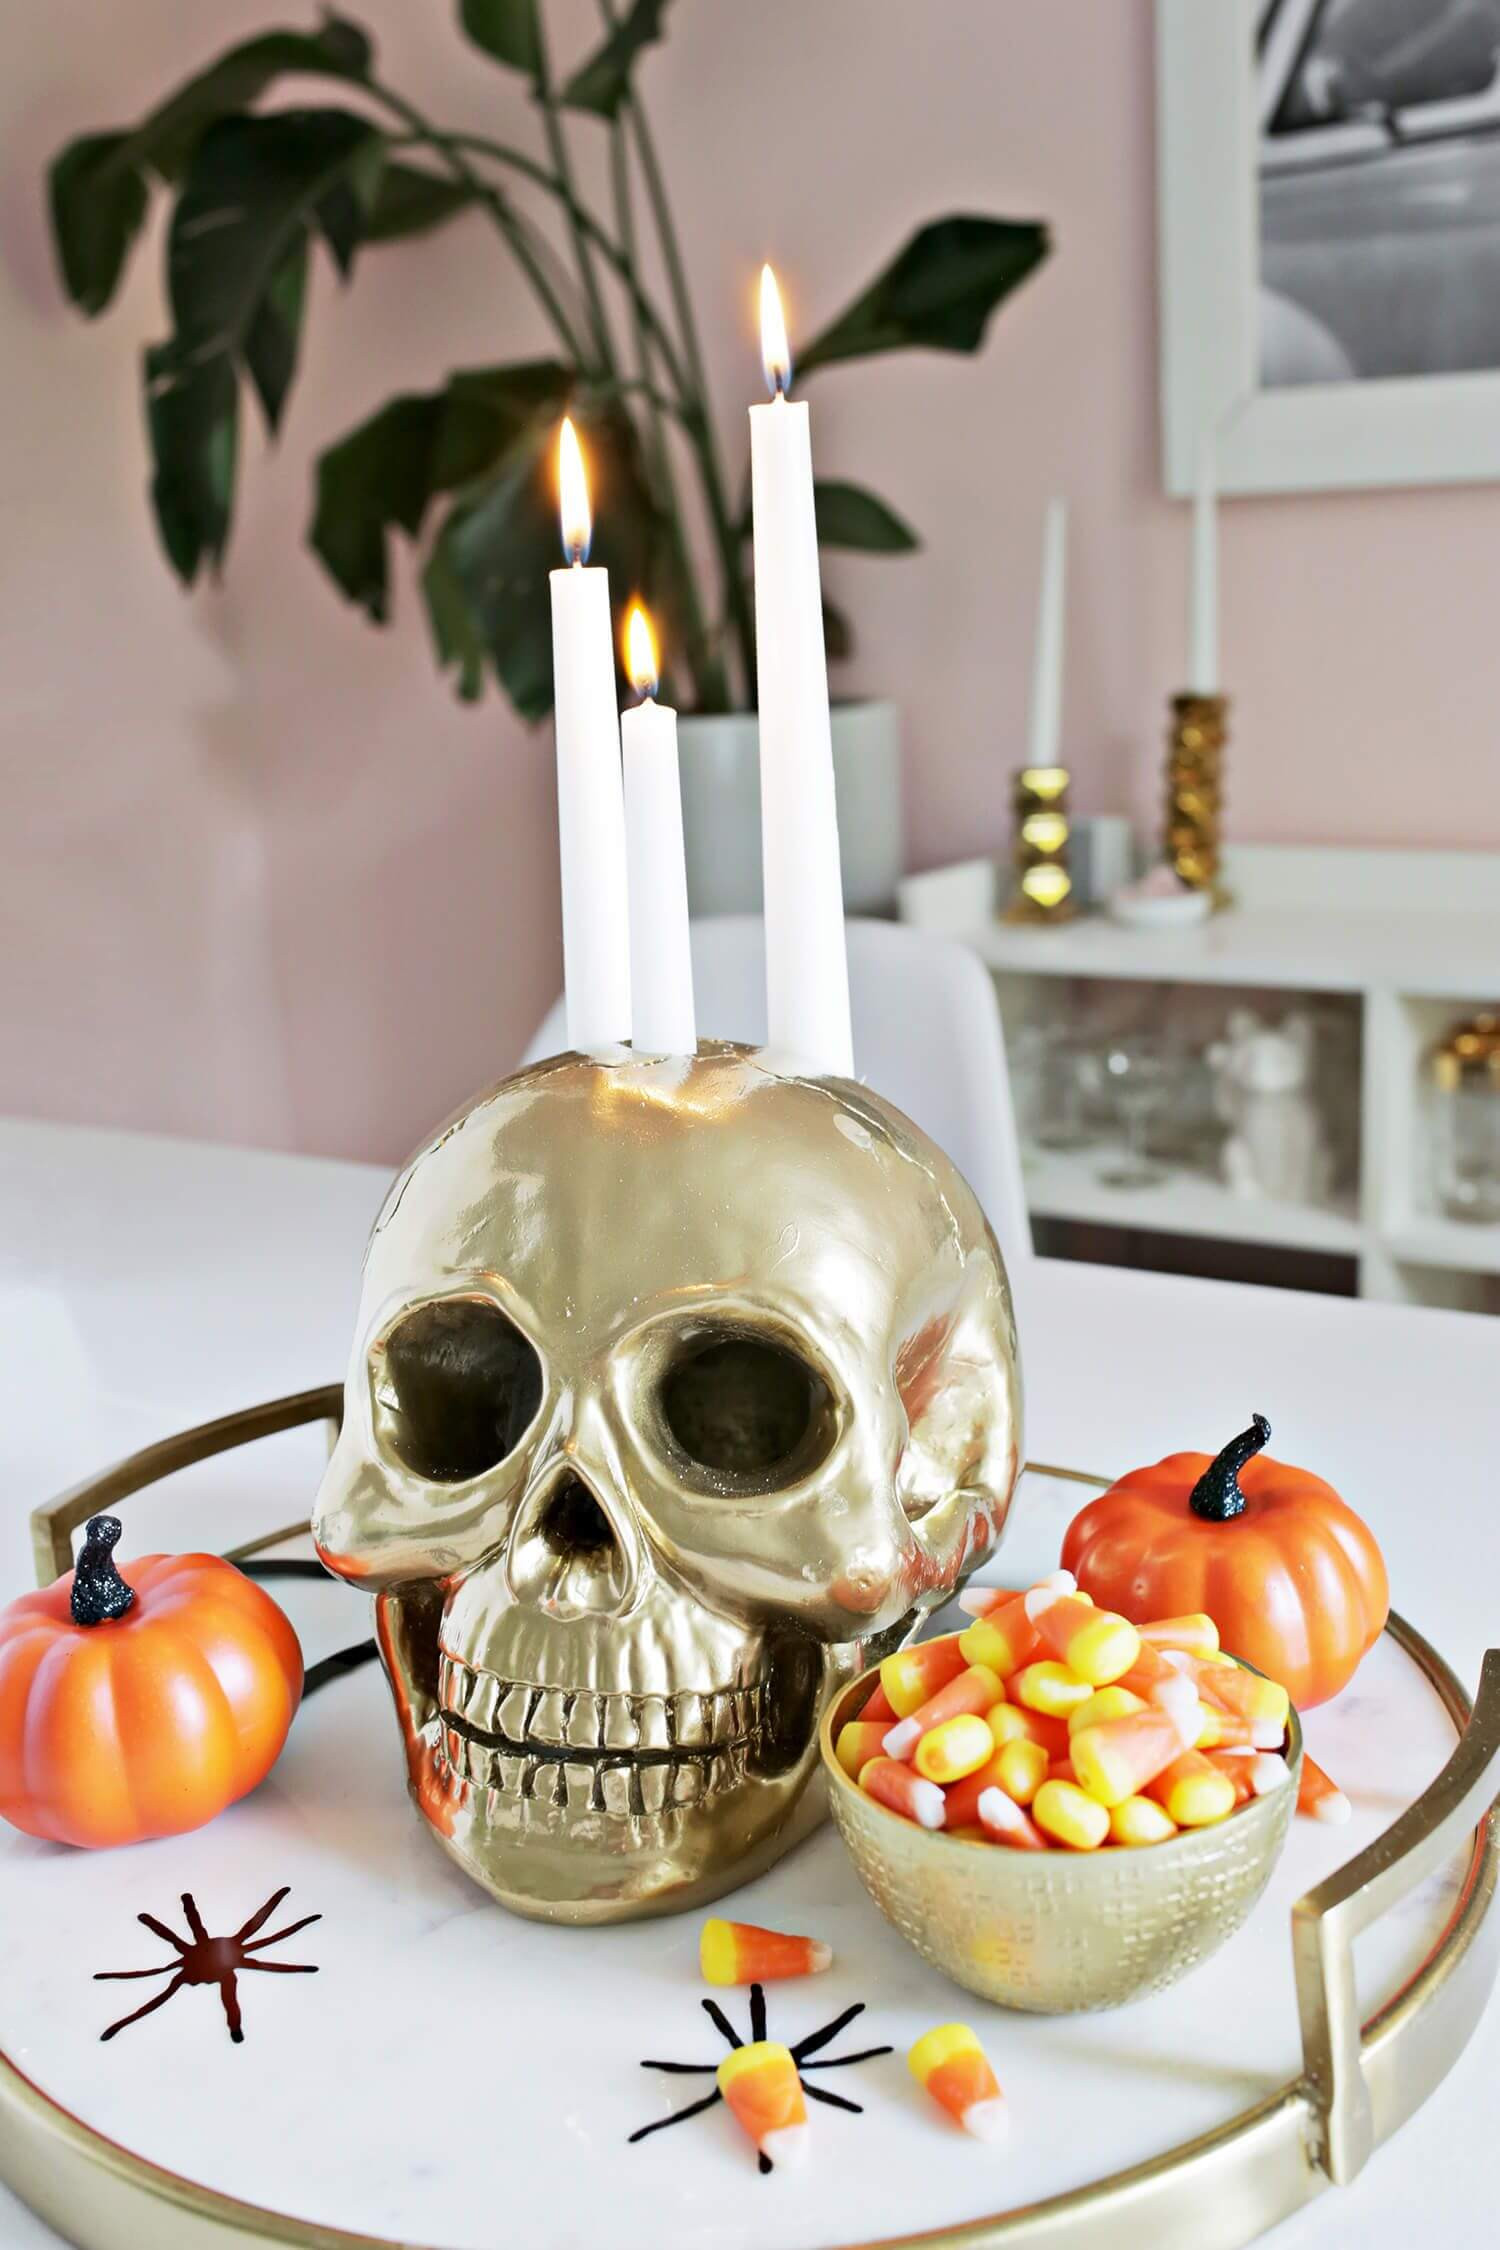 DIY Halloween Home Decor
 Amazing DIY Halloween Decorations Ideas